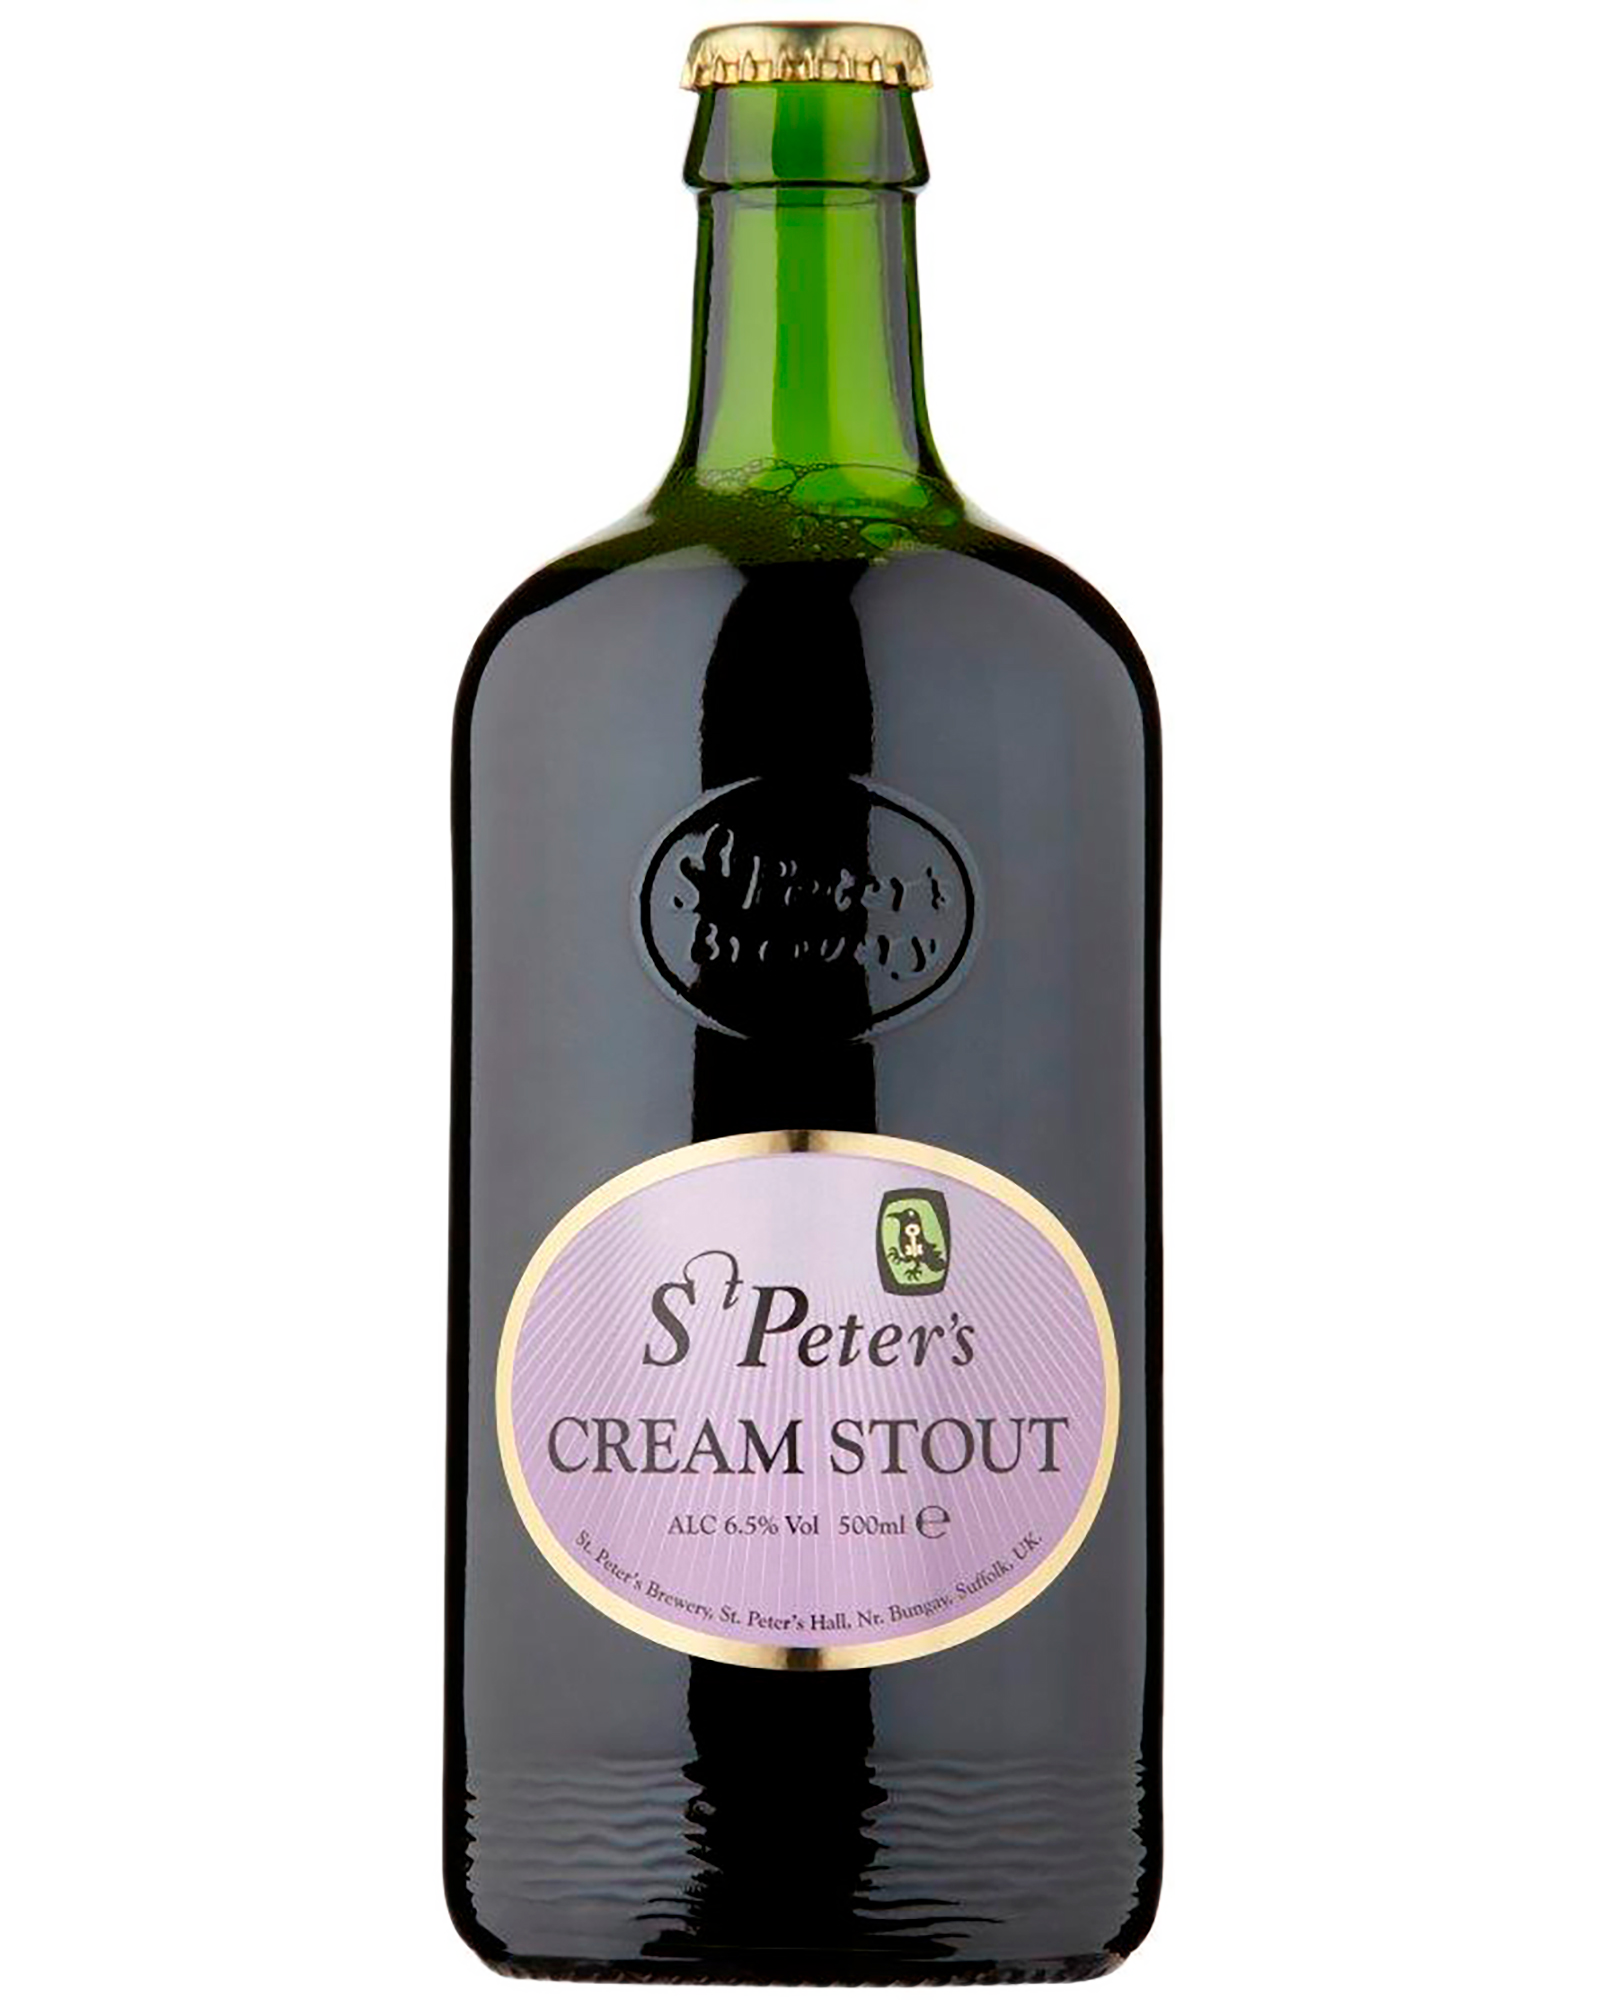 St. Peter’s Cream Stout